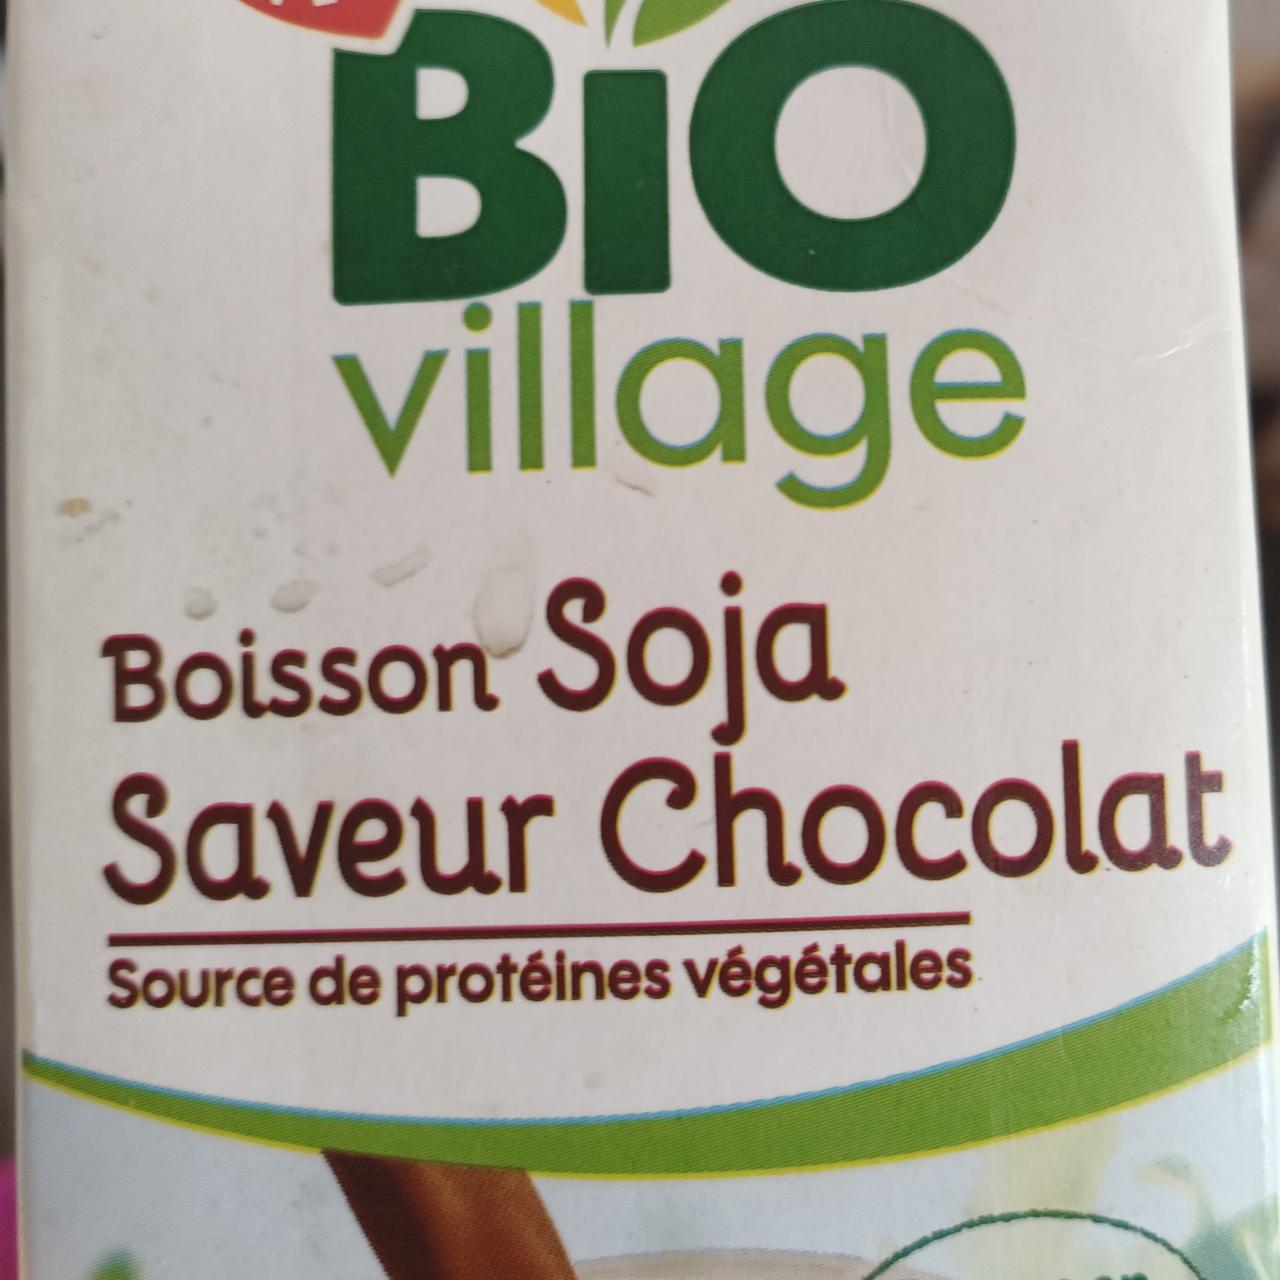 Fotografie - Boisson soja Saveur Chocolat Bio Village